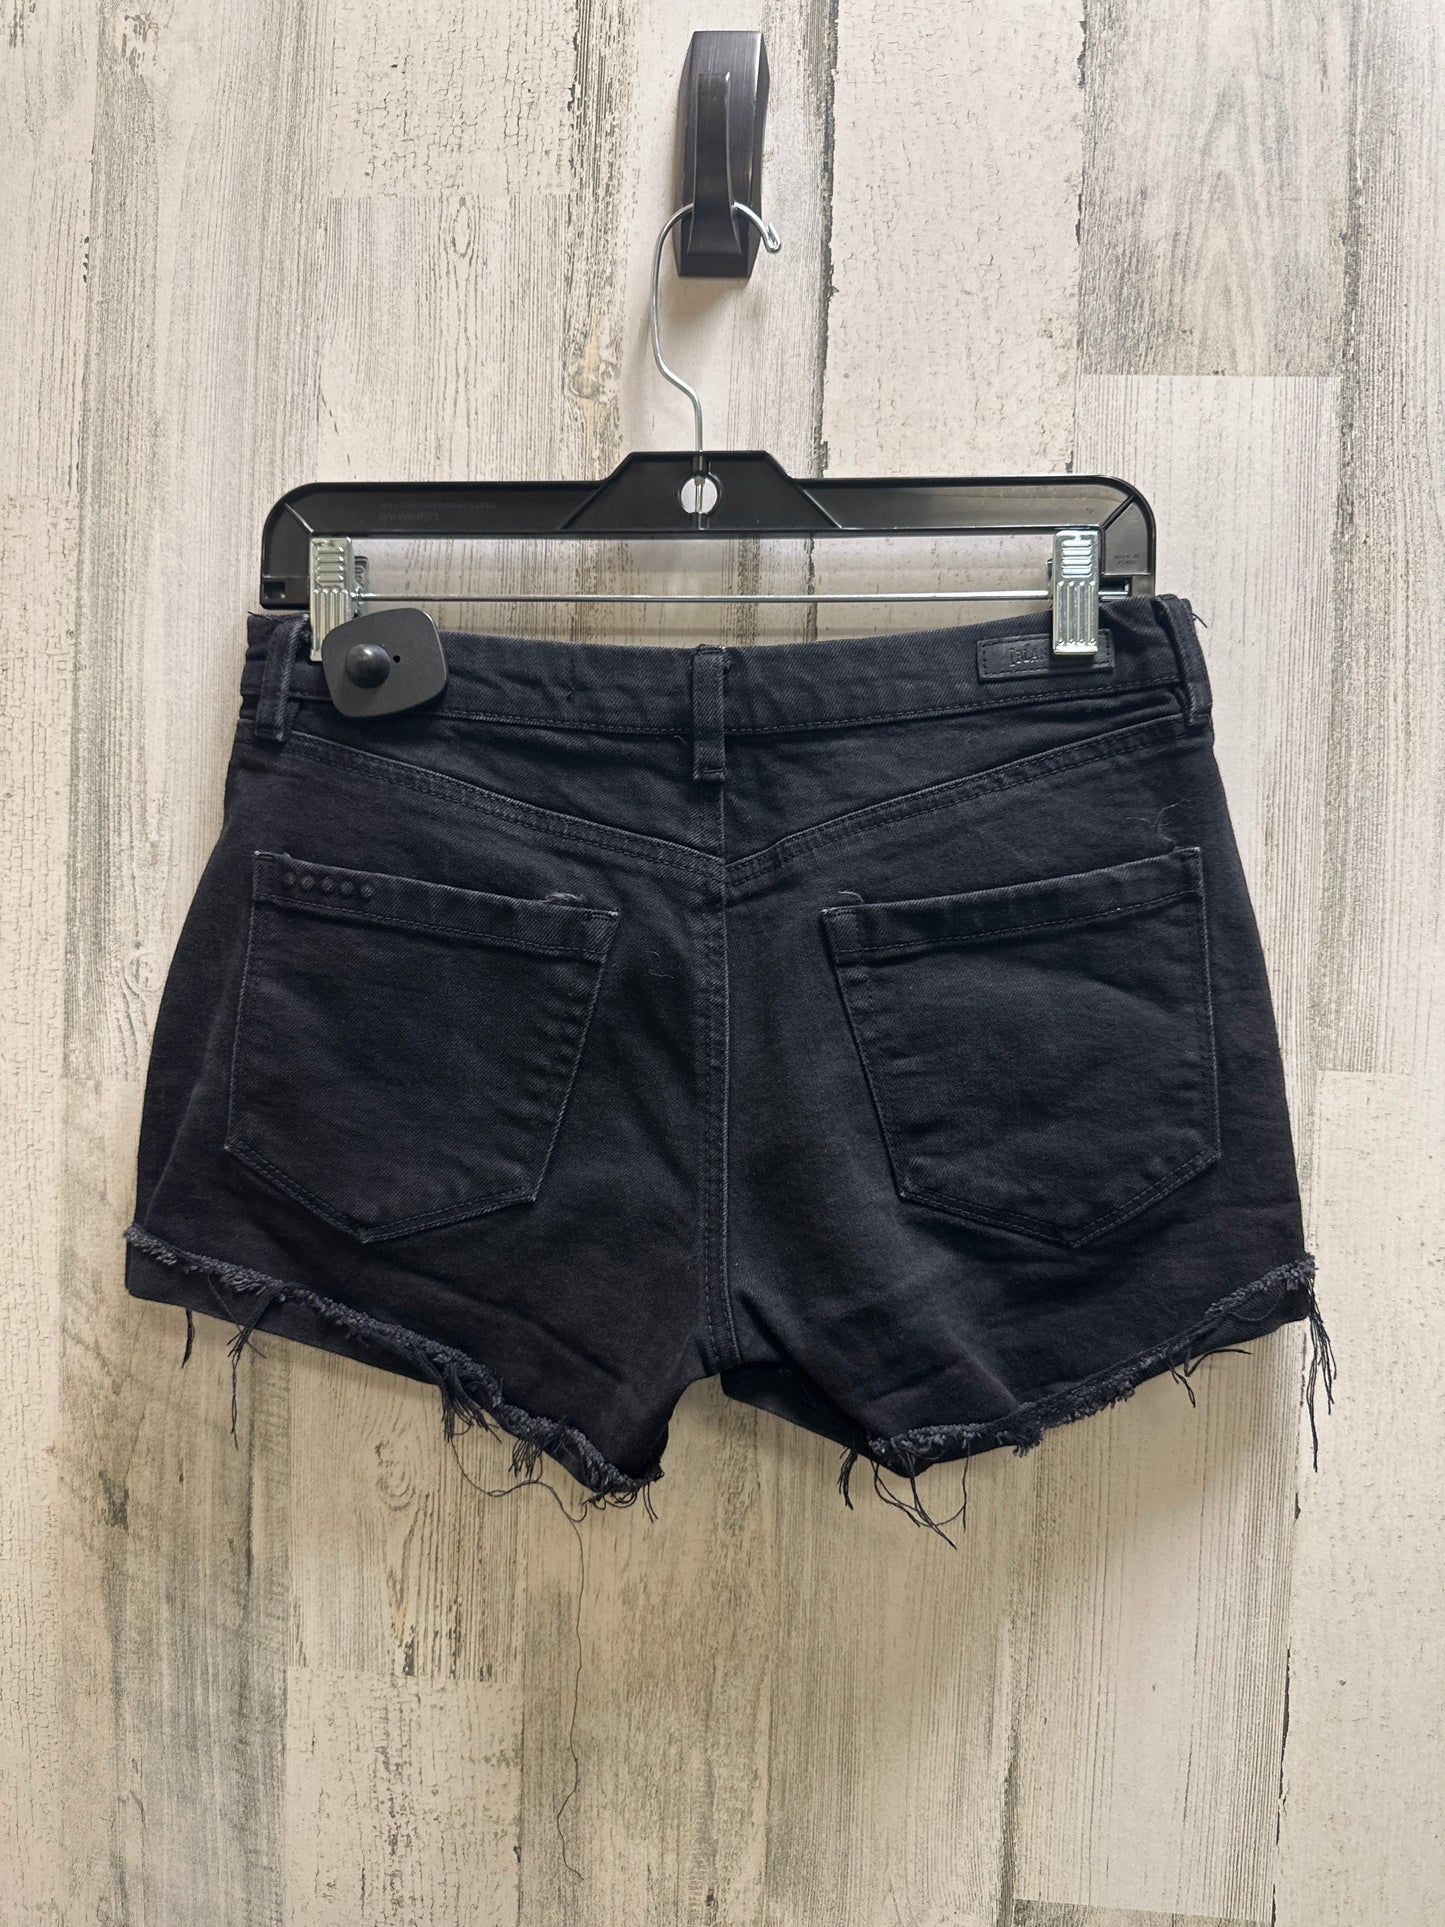 Shorts By Blanknyc  Size: 4